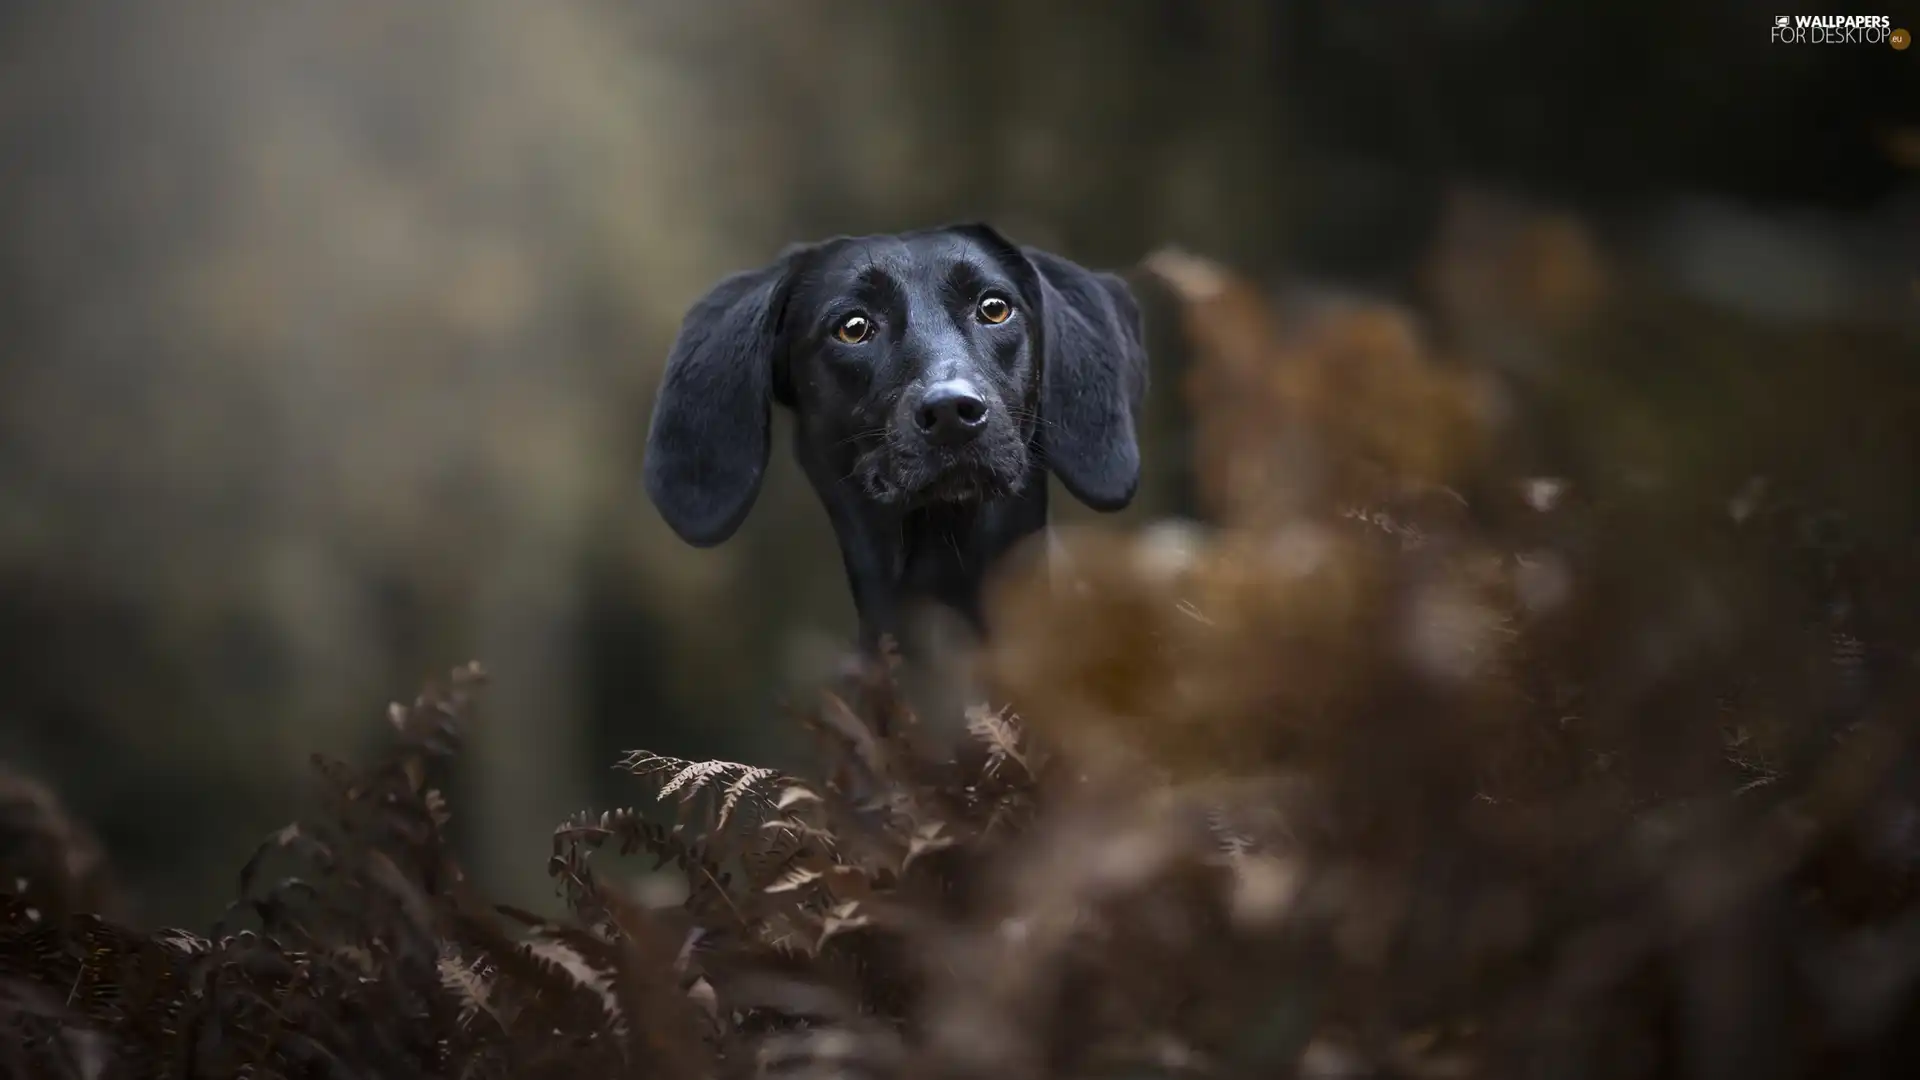 Longs, ears, background, muzzle, fuzzy, dog, Black, Plants